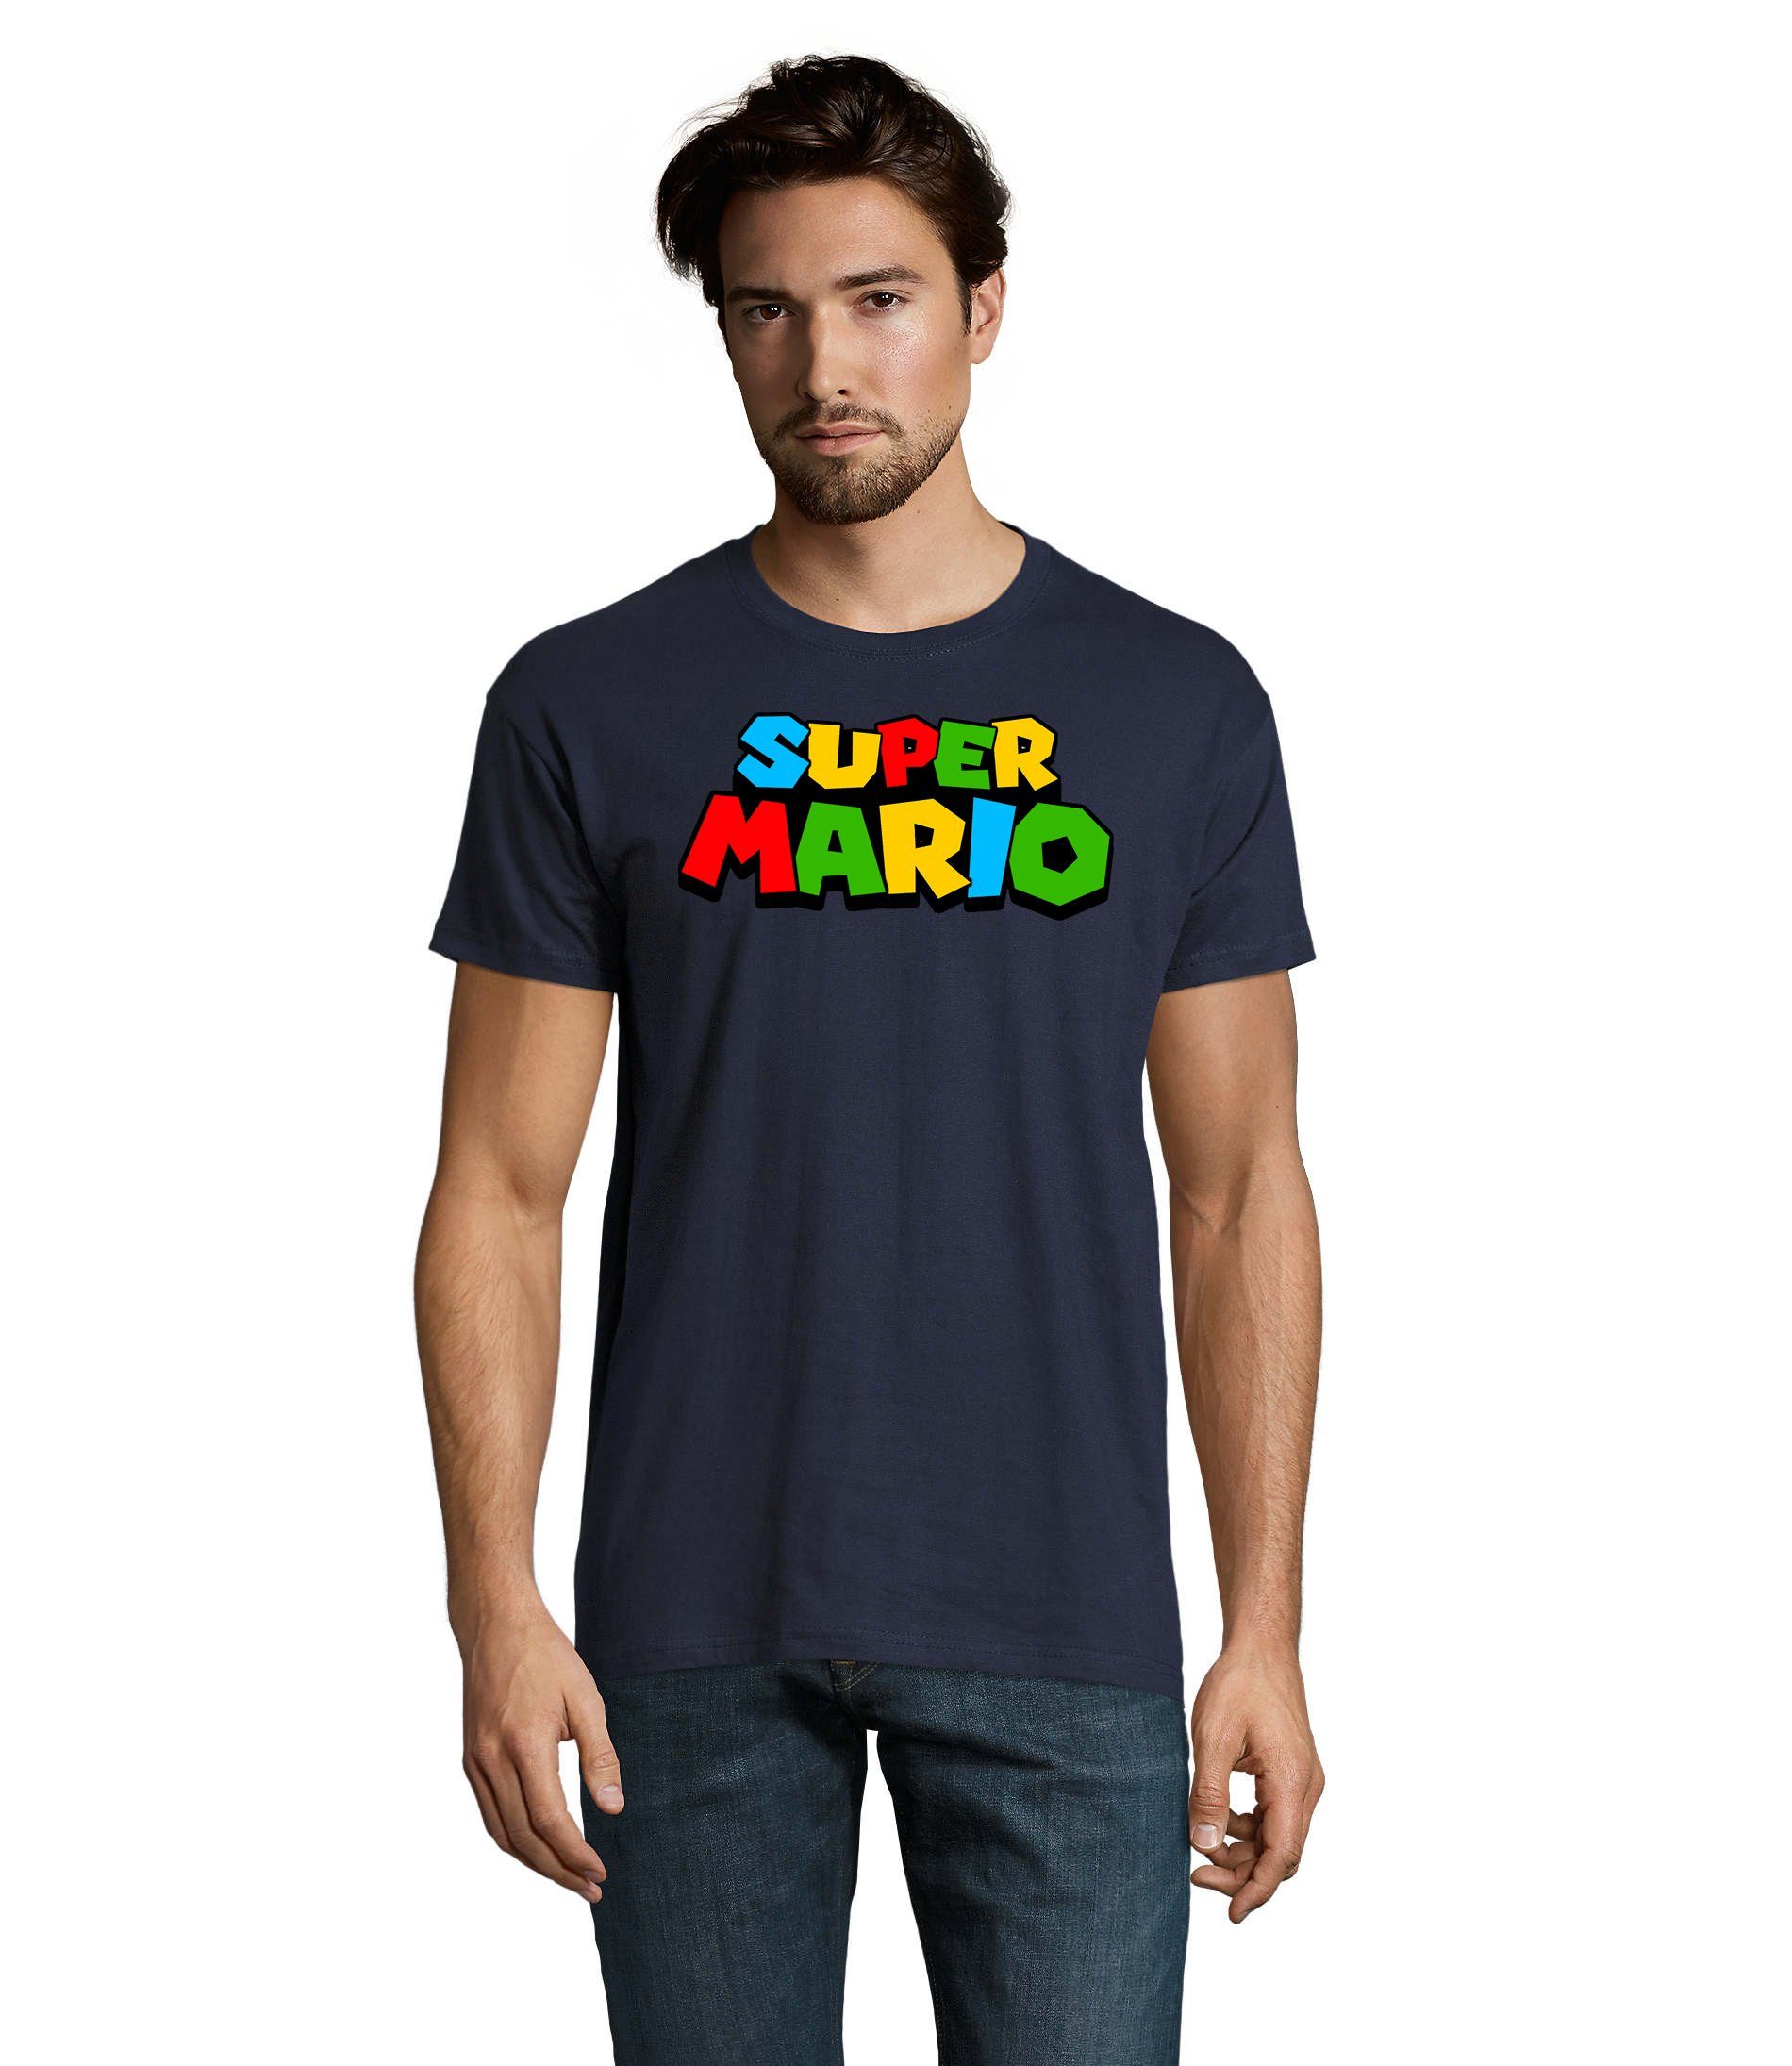 Blondie & Brownie T-Shirt Herren Super Mario Nintendo Gamer Gaming Konsole Navyblau